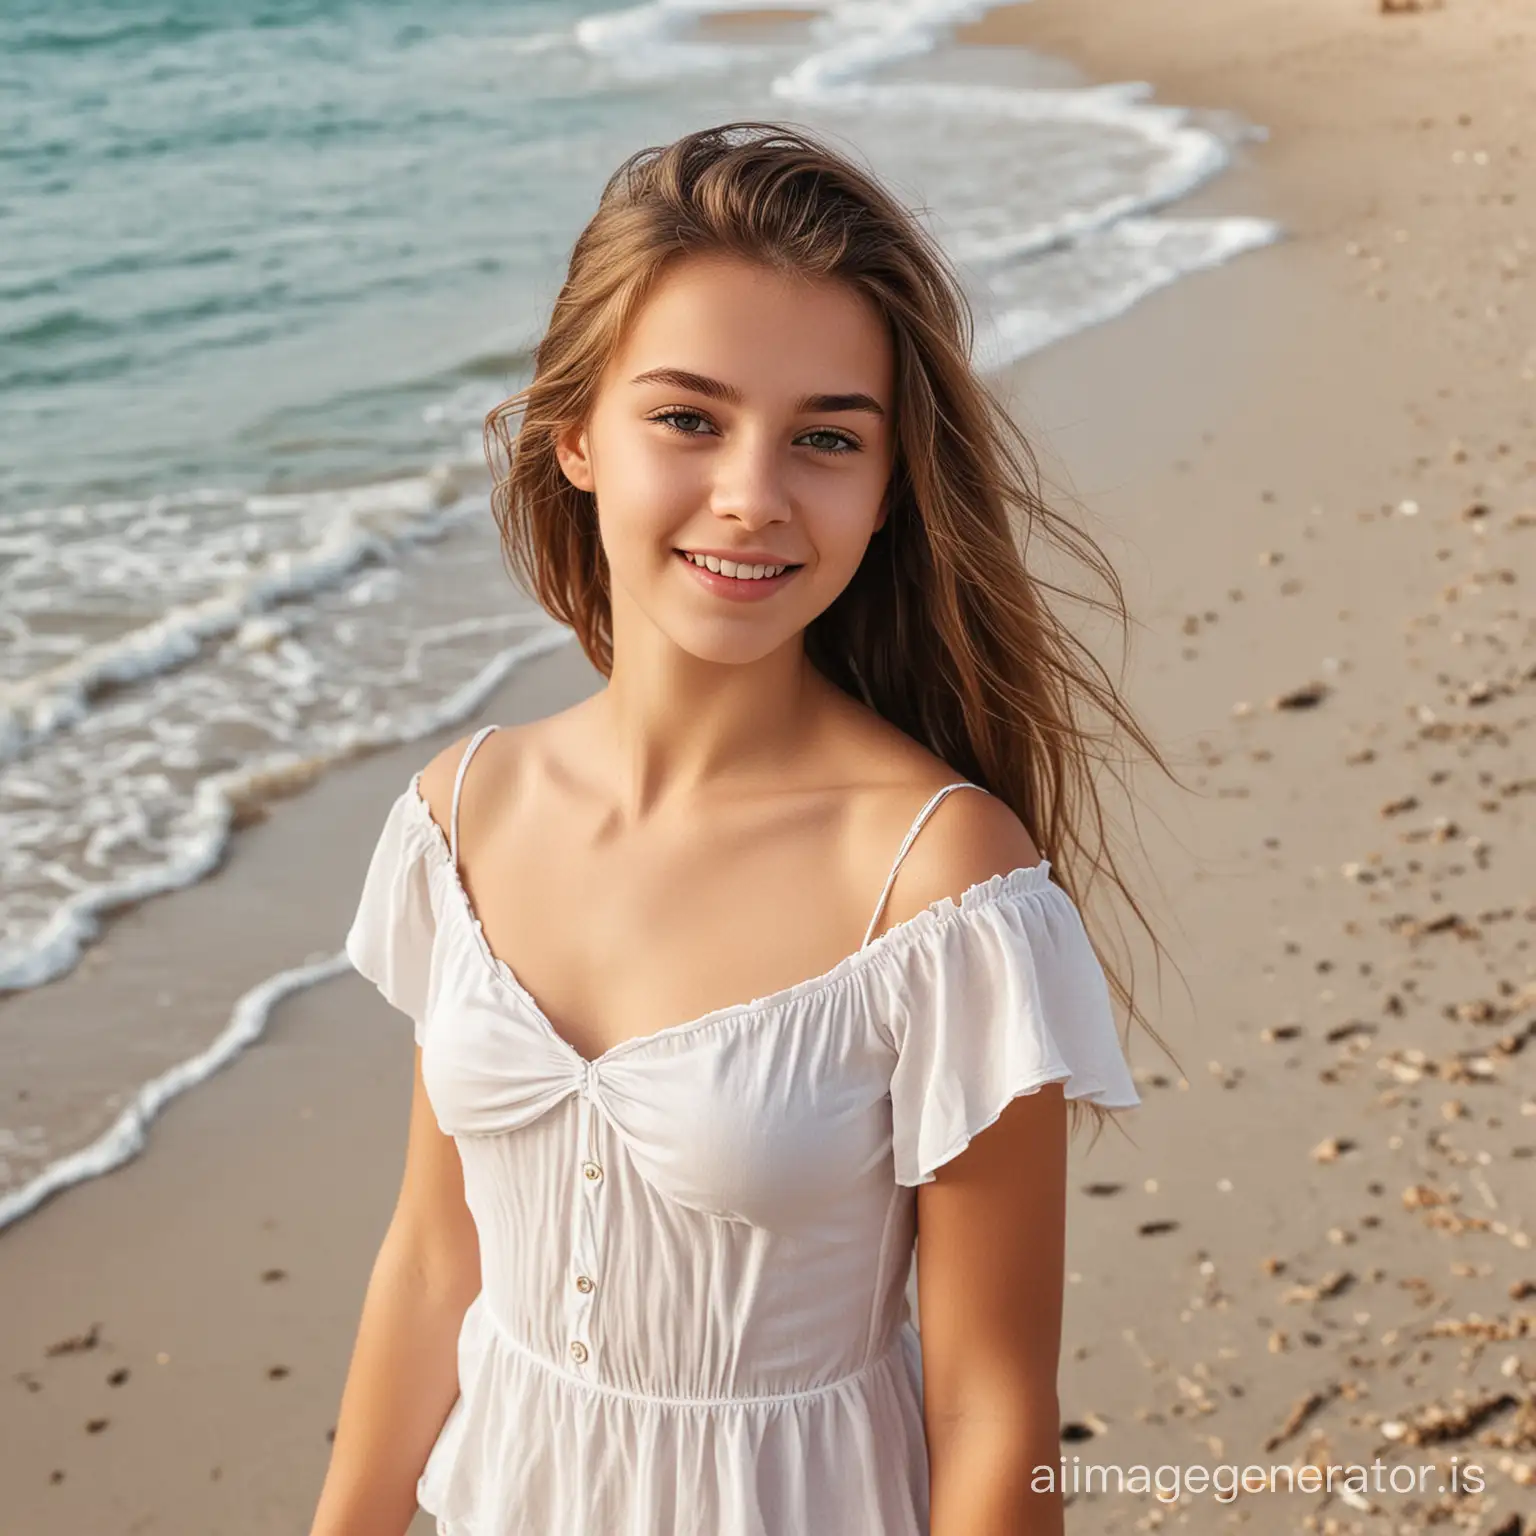 Youthful-European-Beachgoer-Enjoying-Seaside-Leisure